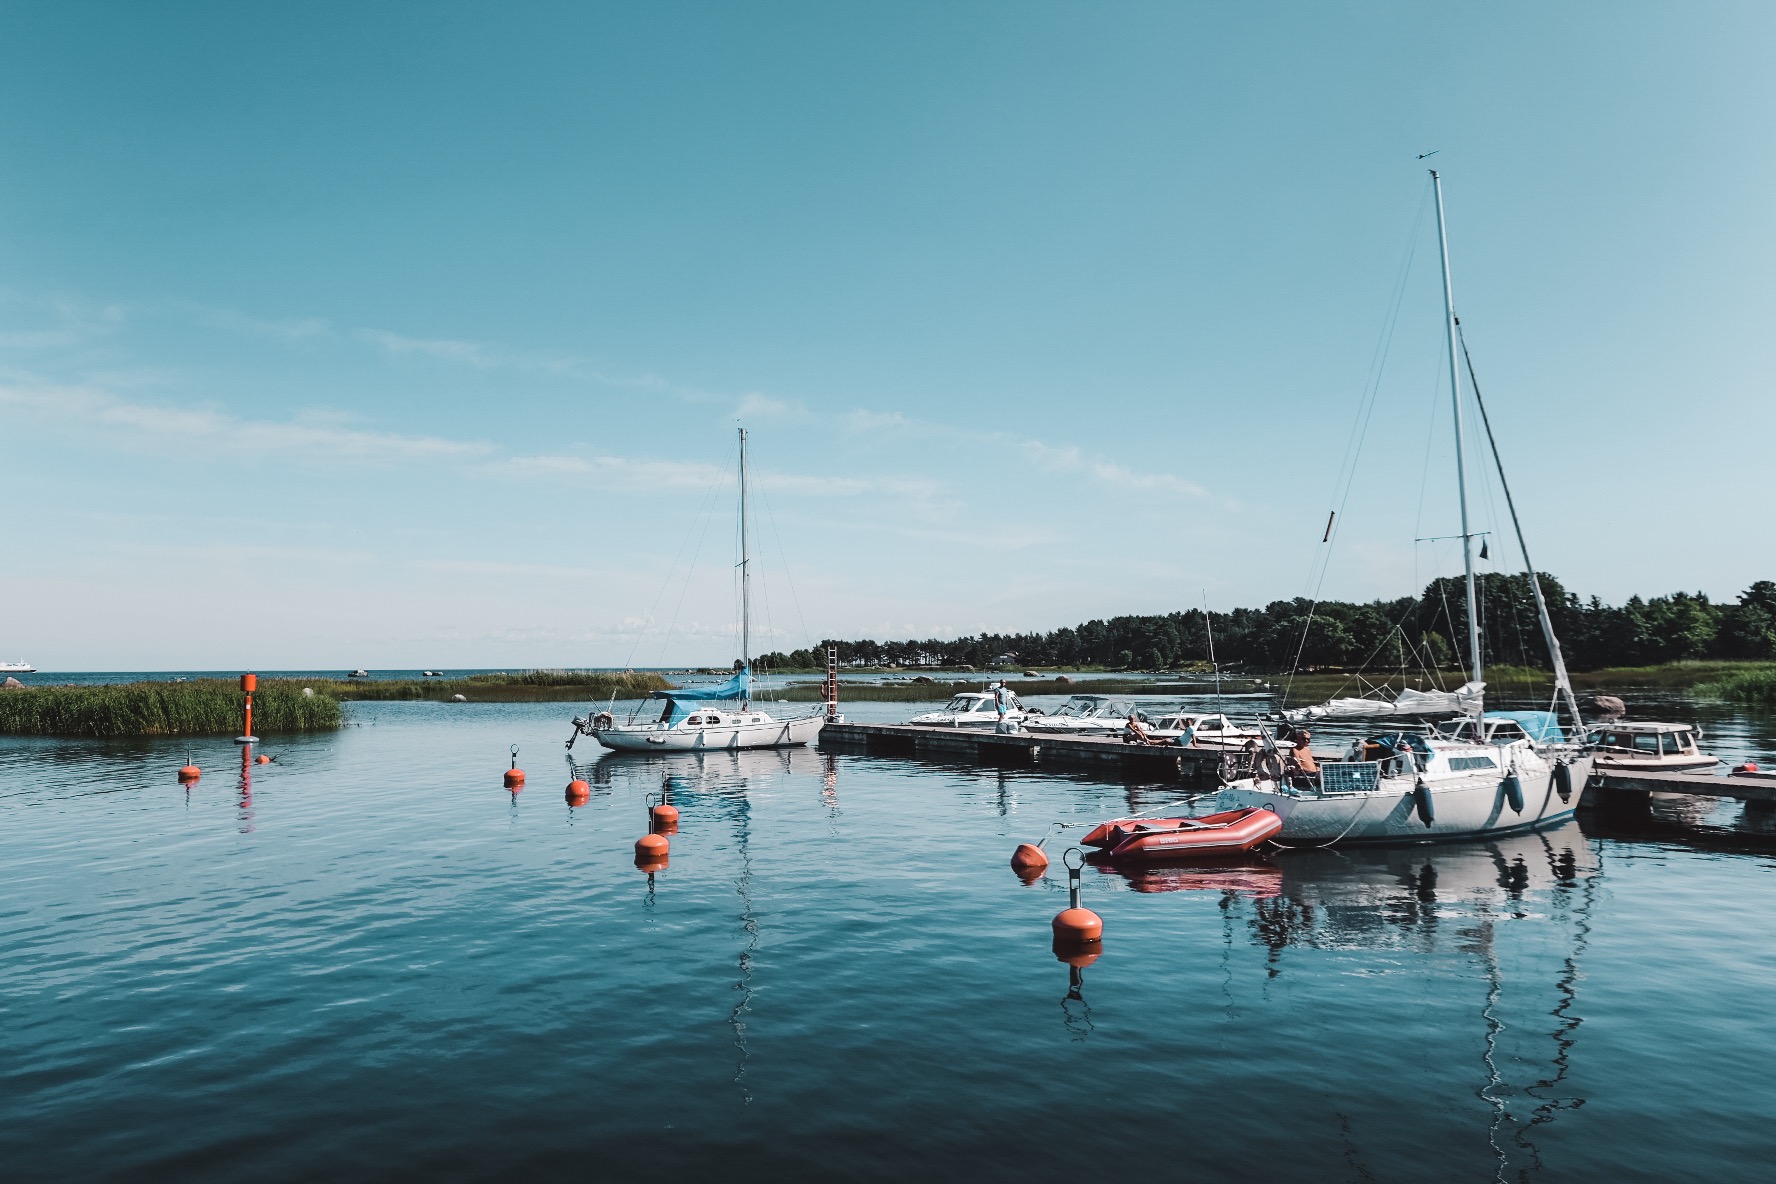 Boats at Prangli harbour near Tallinn, Estonia